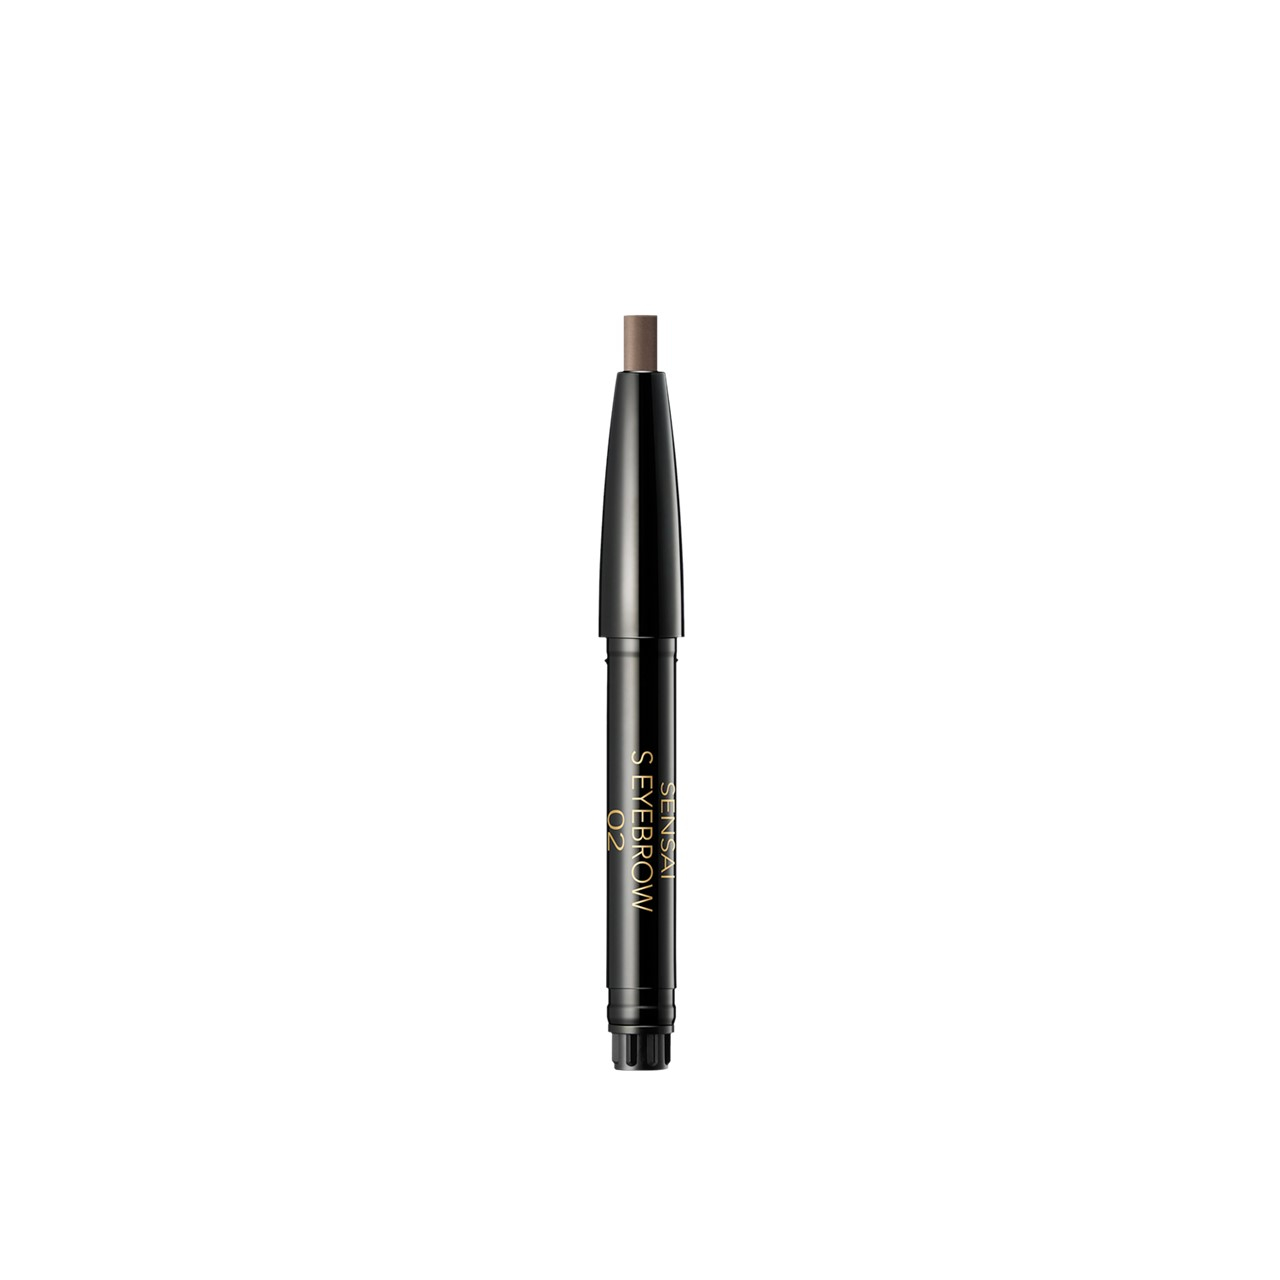 SENSAI Styling Eyebrow Pencil Refill 02 Warm Brown 0.2g (0.007 oz)